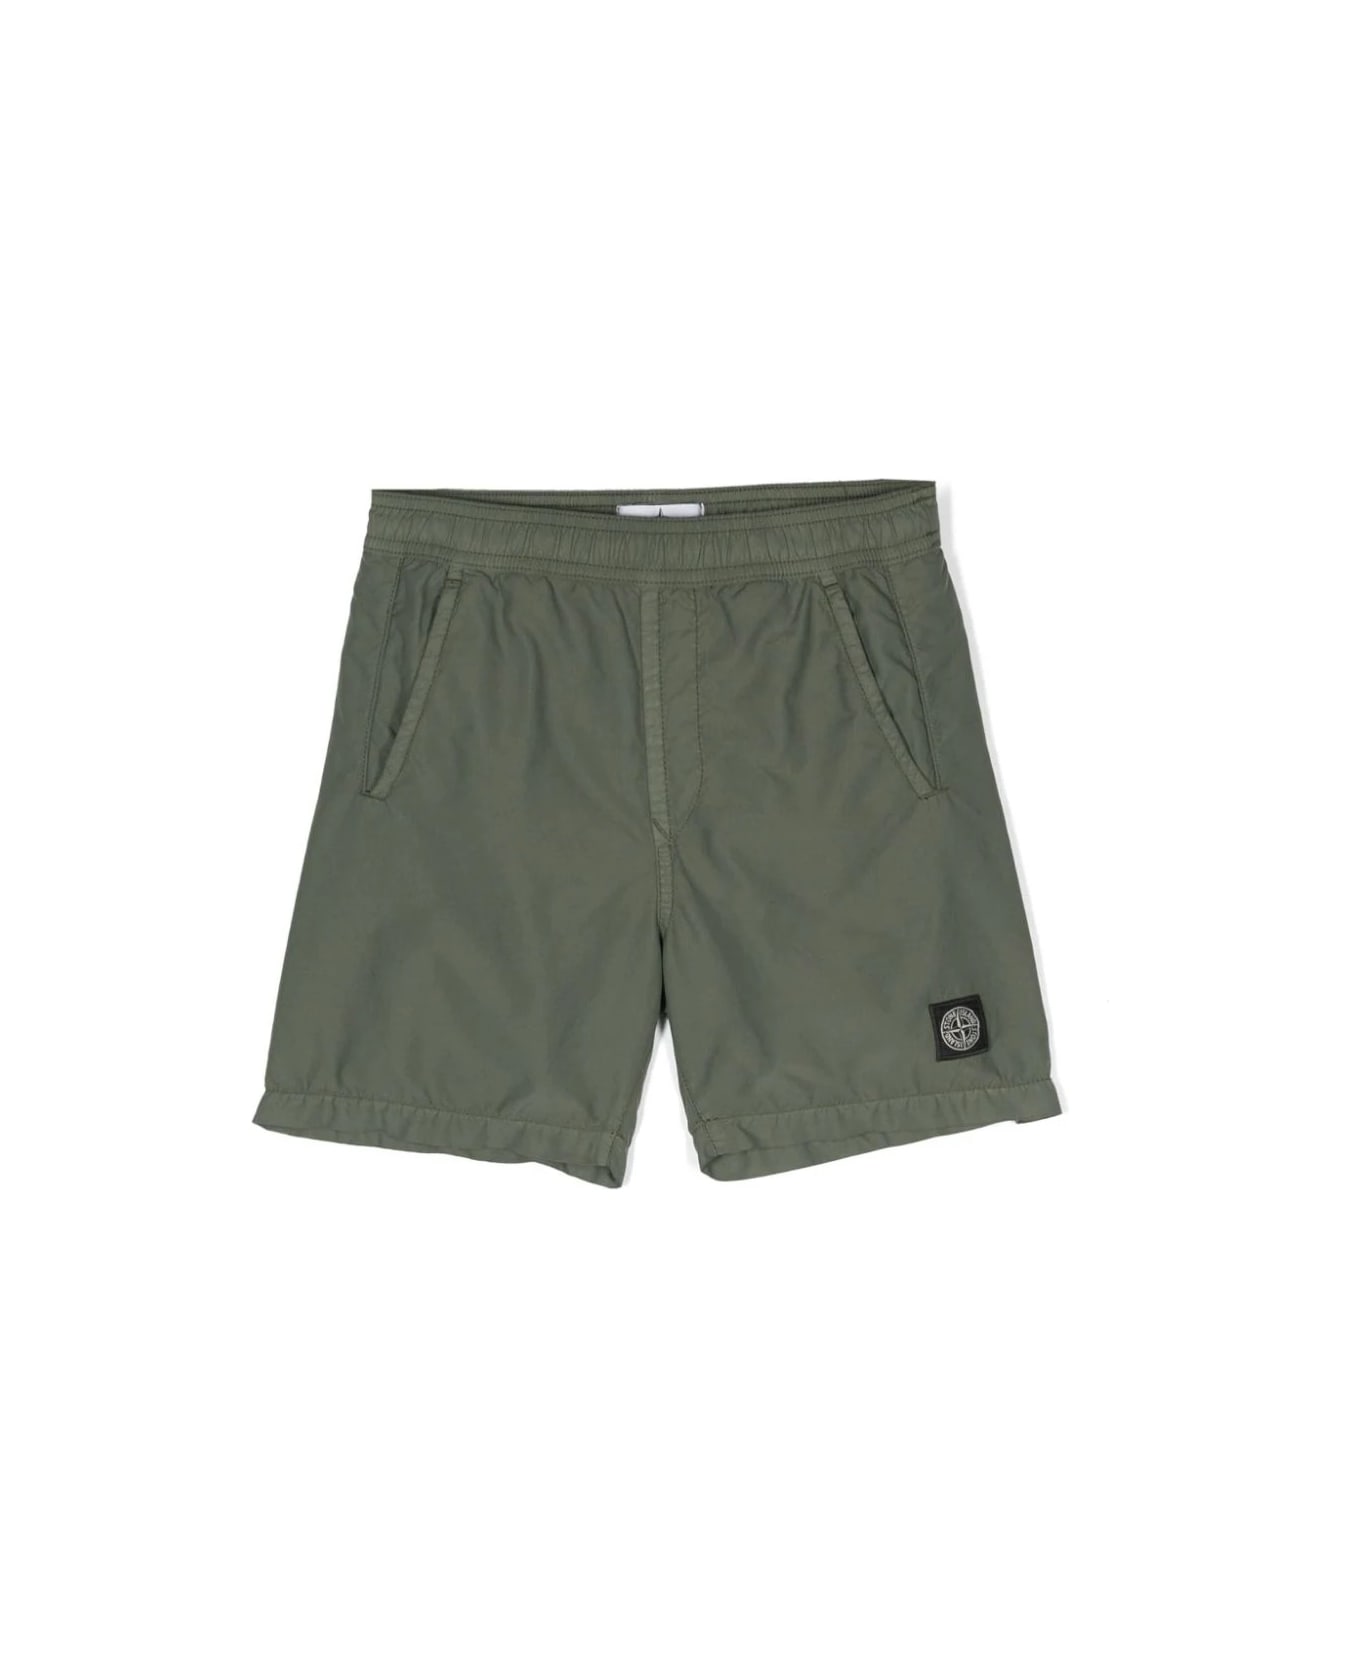 Stone Island Olive Green Swim Shorts With Logo Patch - GREEN 水着